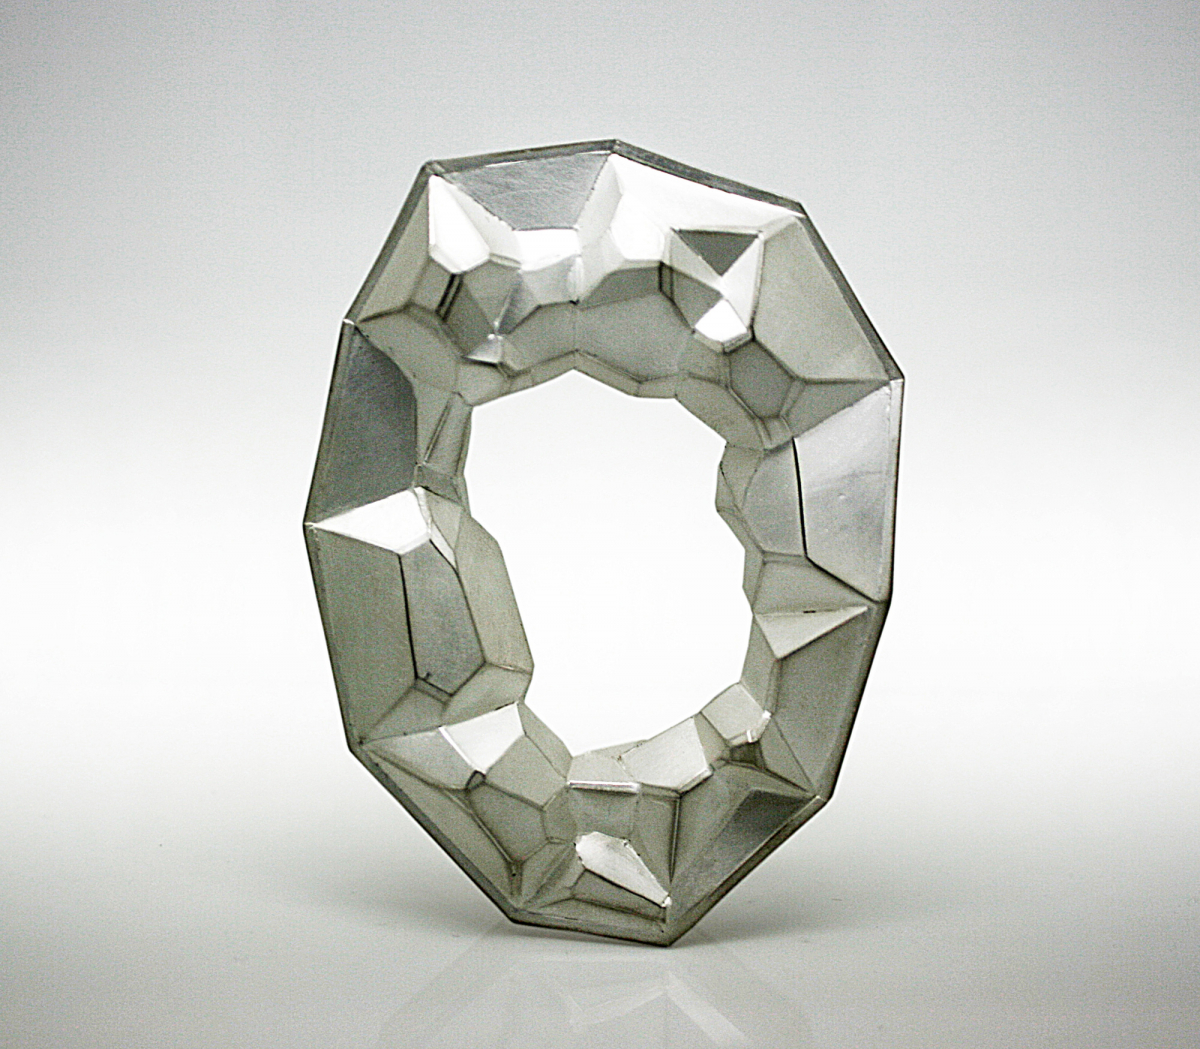  Untitled Brooch, 2011, Silver